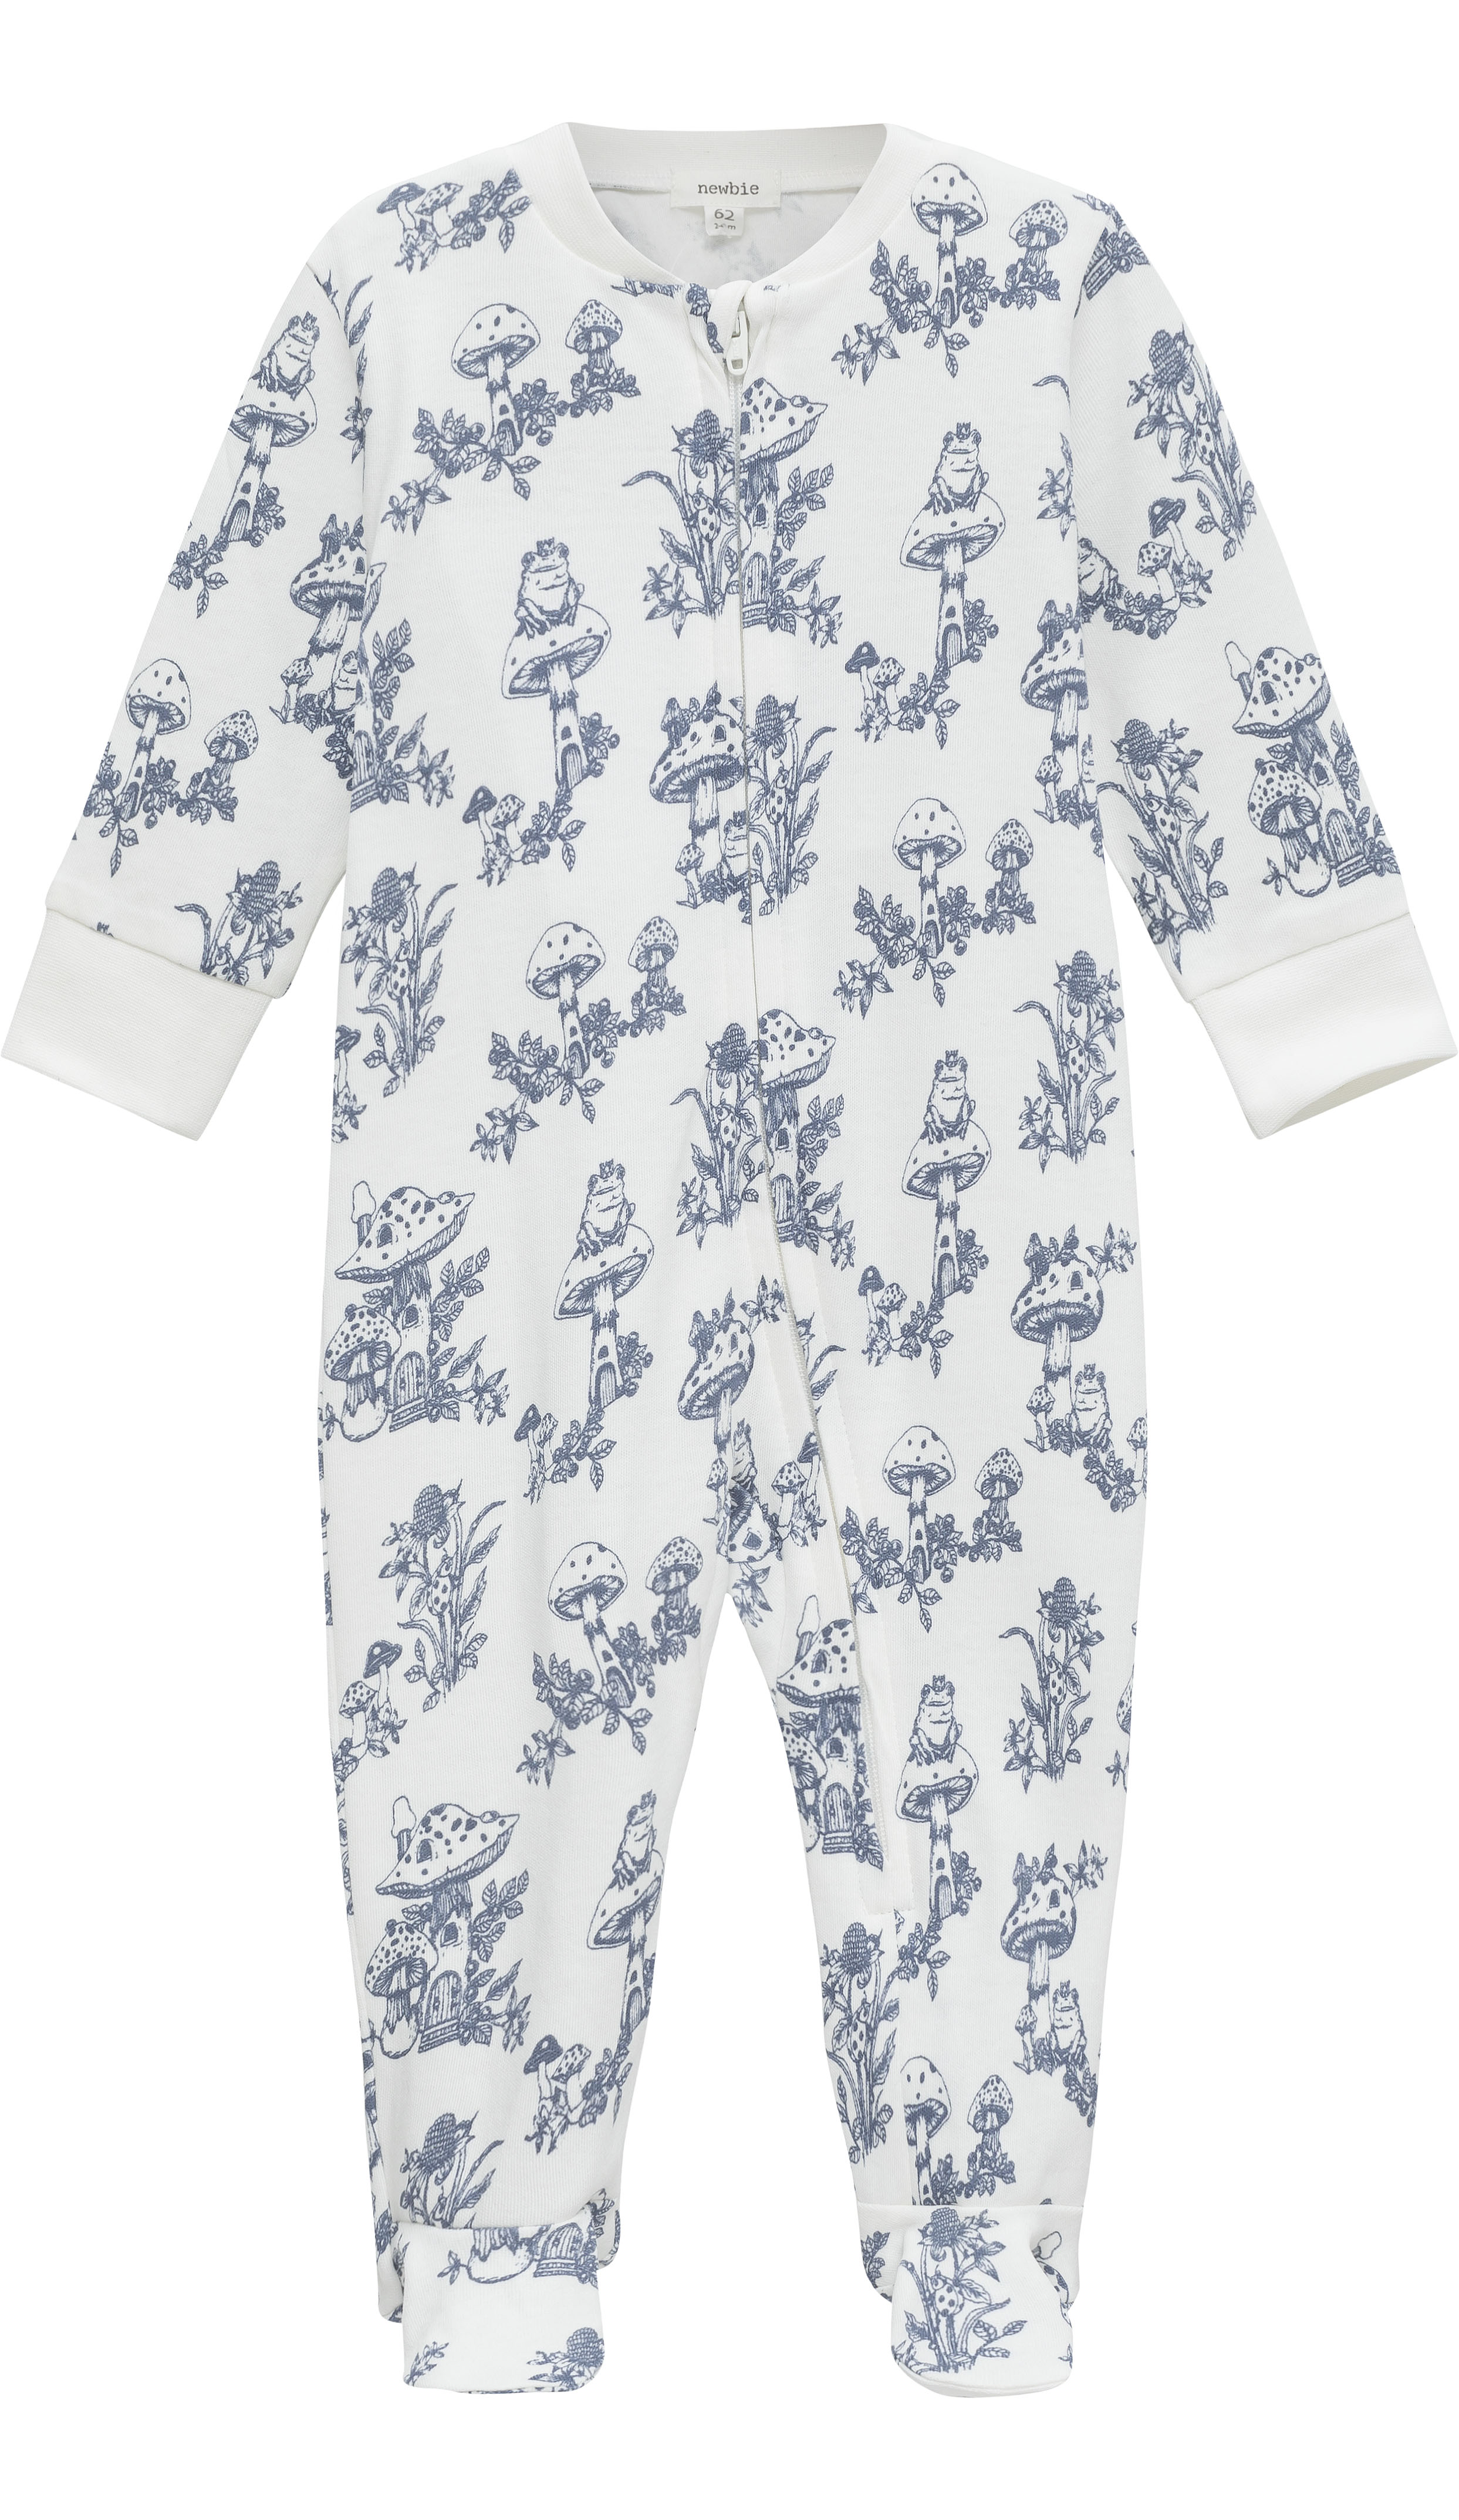 Newbie UK - Newbie Baby Clothes - Stylish Affordable Newbie Clothes